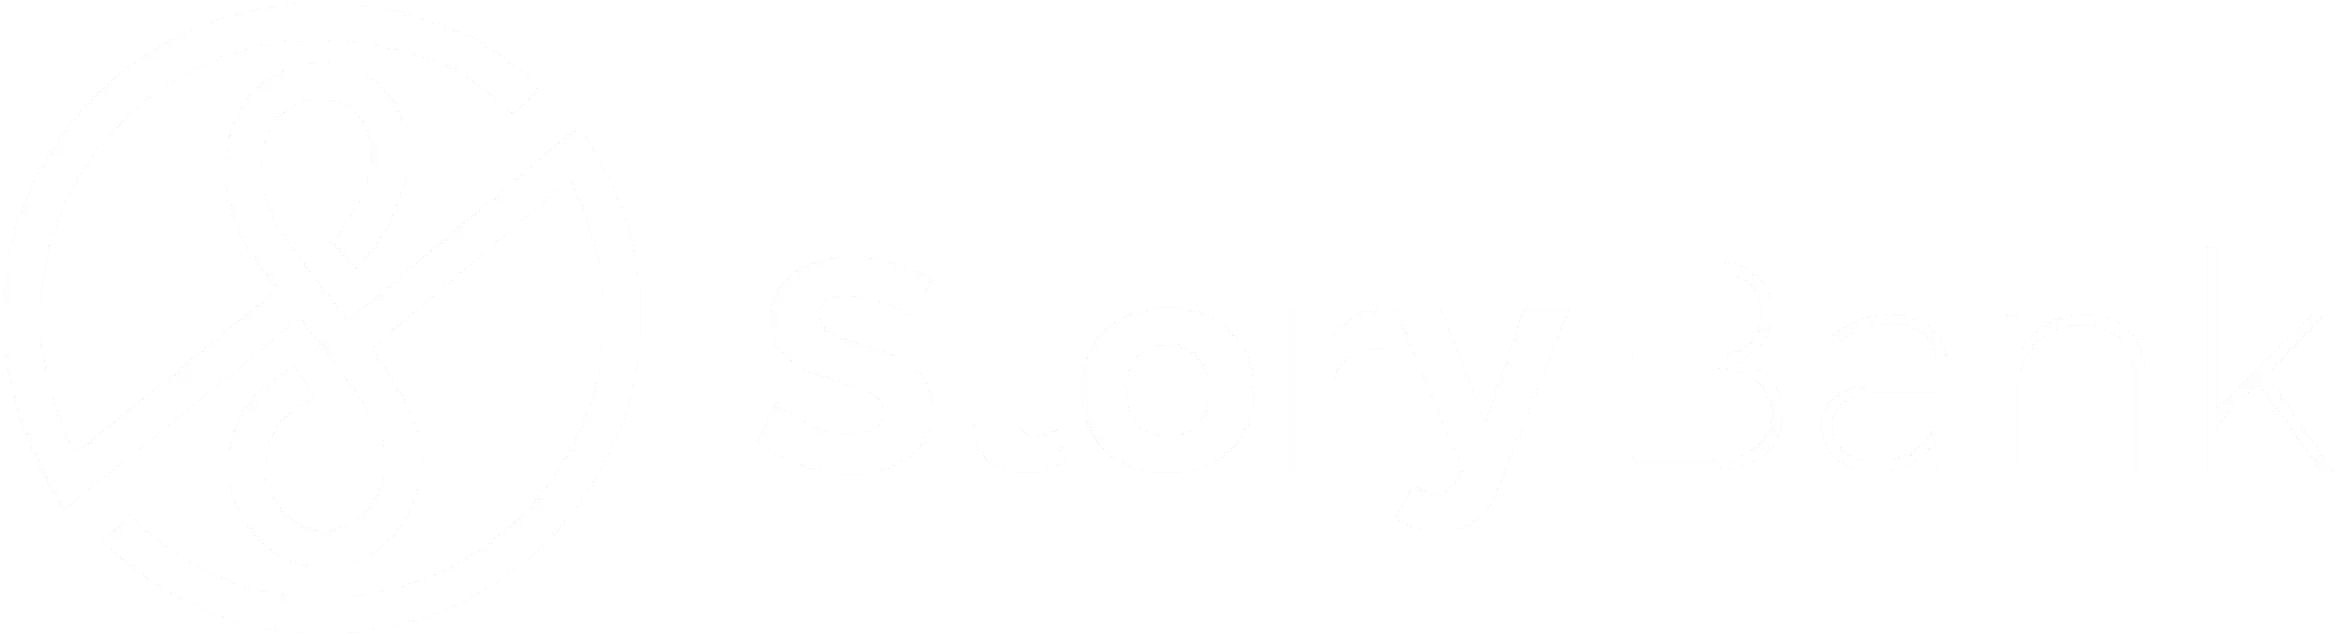 Story Bank